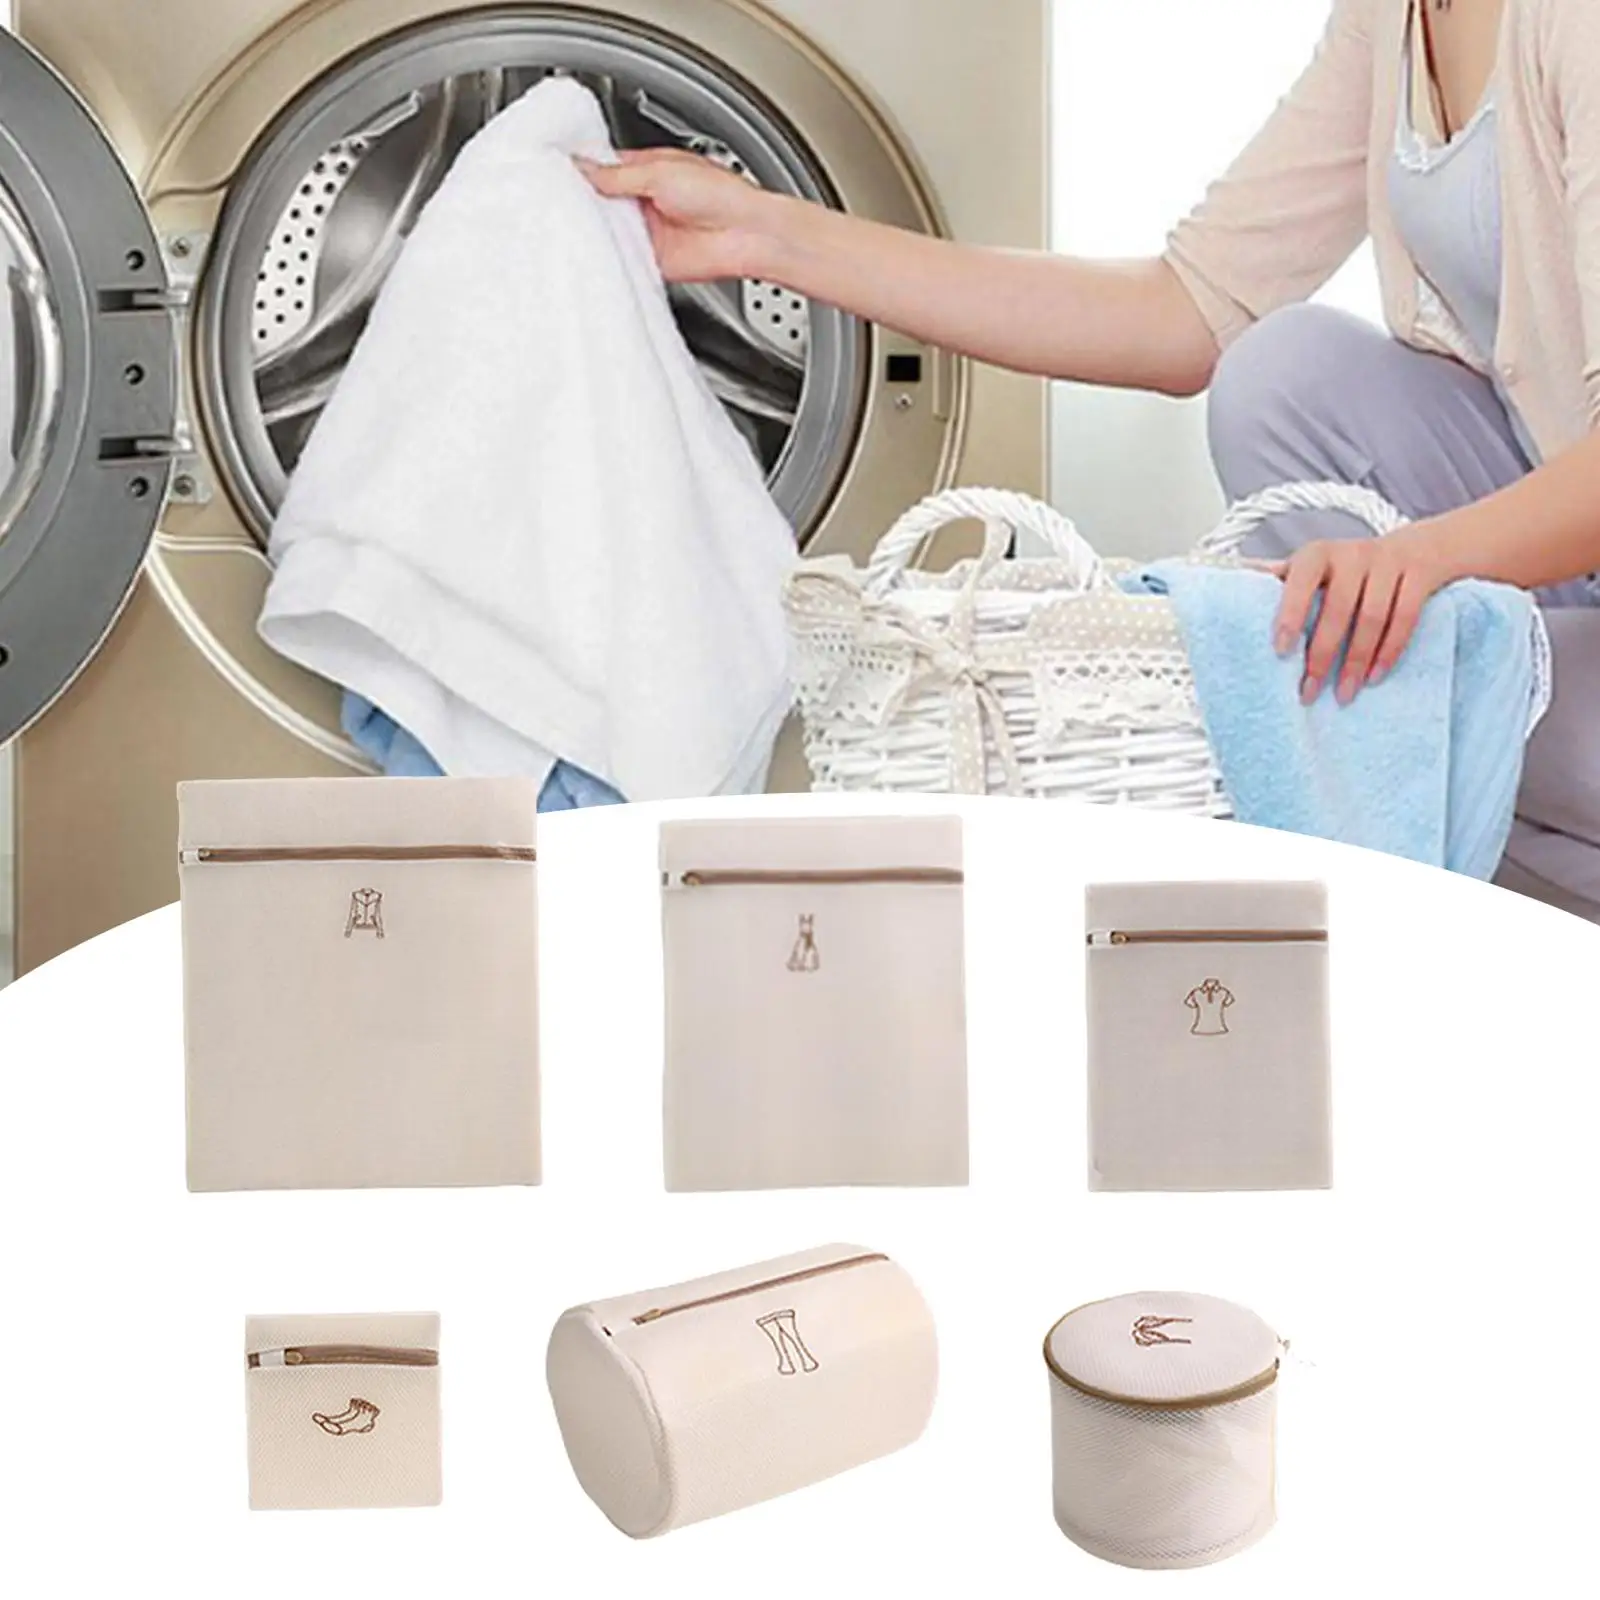 Mesh Laundry Bags Travel Storage Organize Bags Clothes Storage Pouch Delicates Wash Bag for Dress Trousers Shirt Bra Lingerie